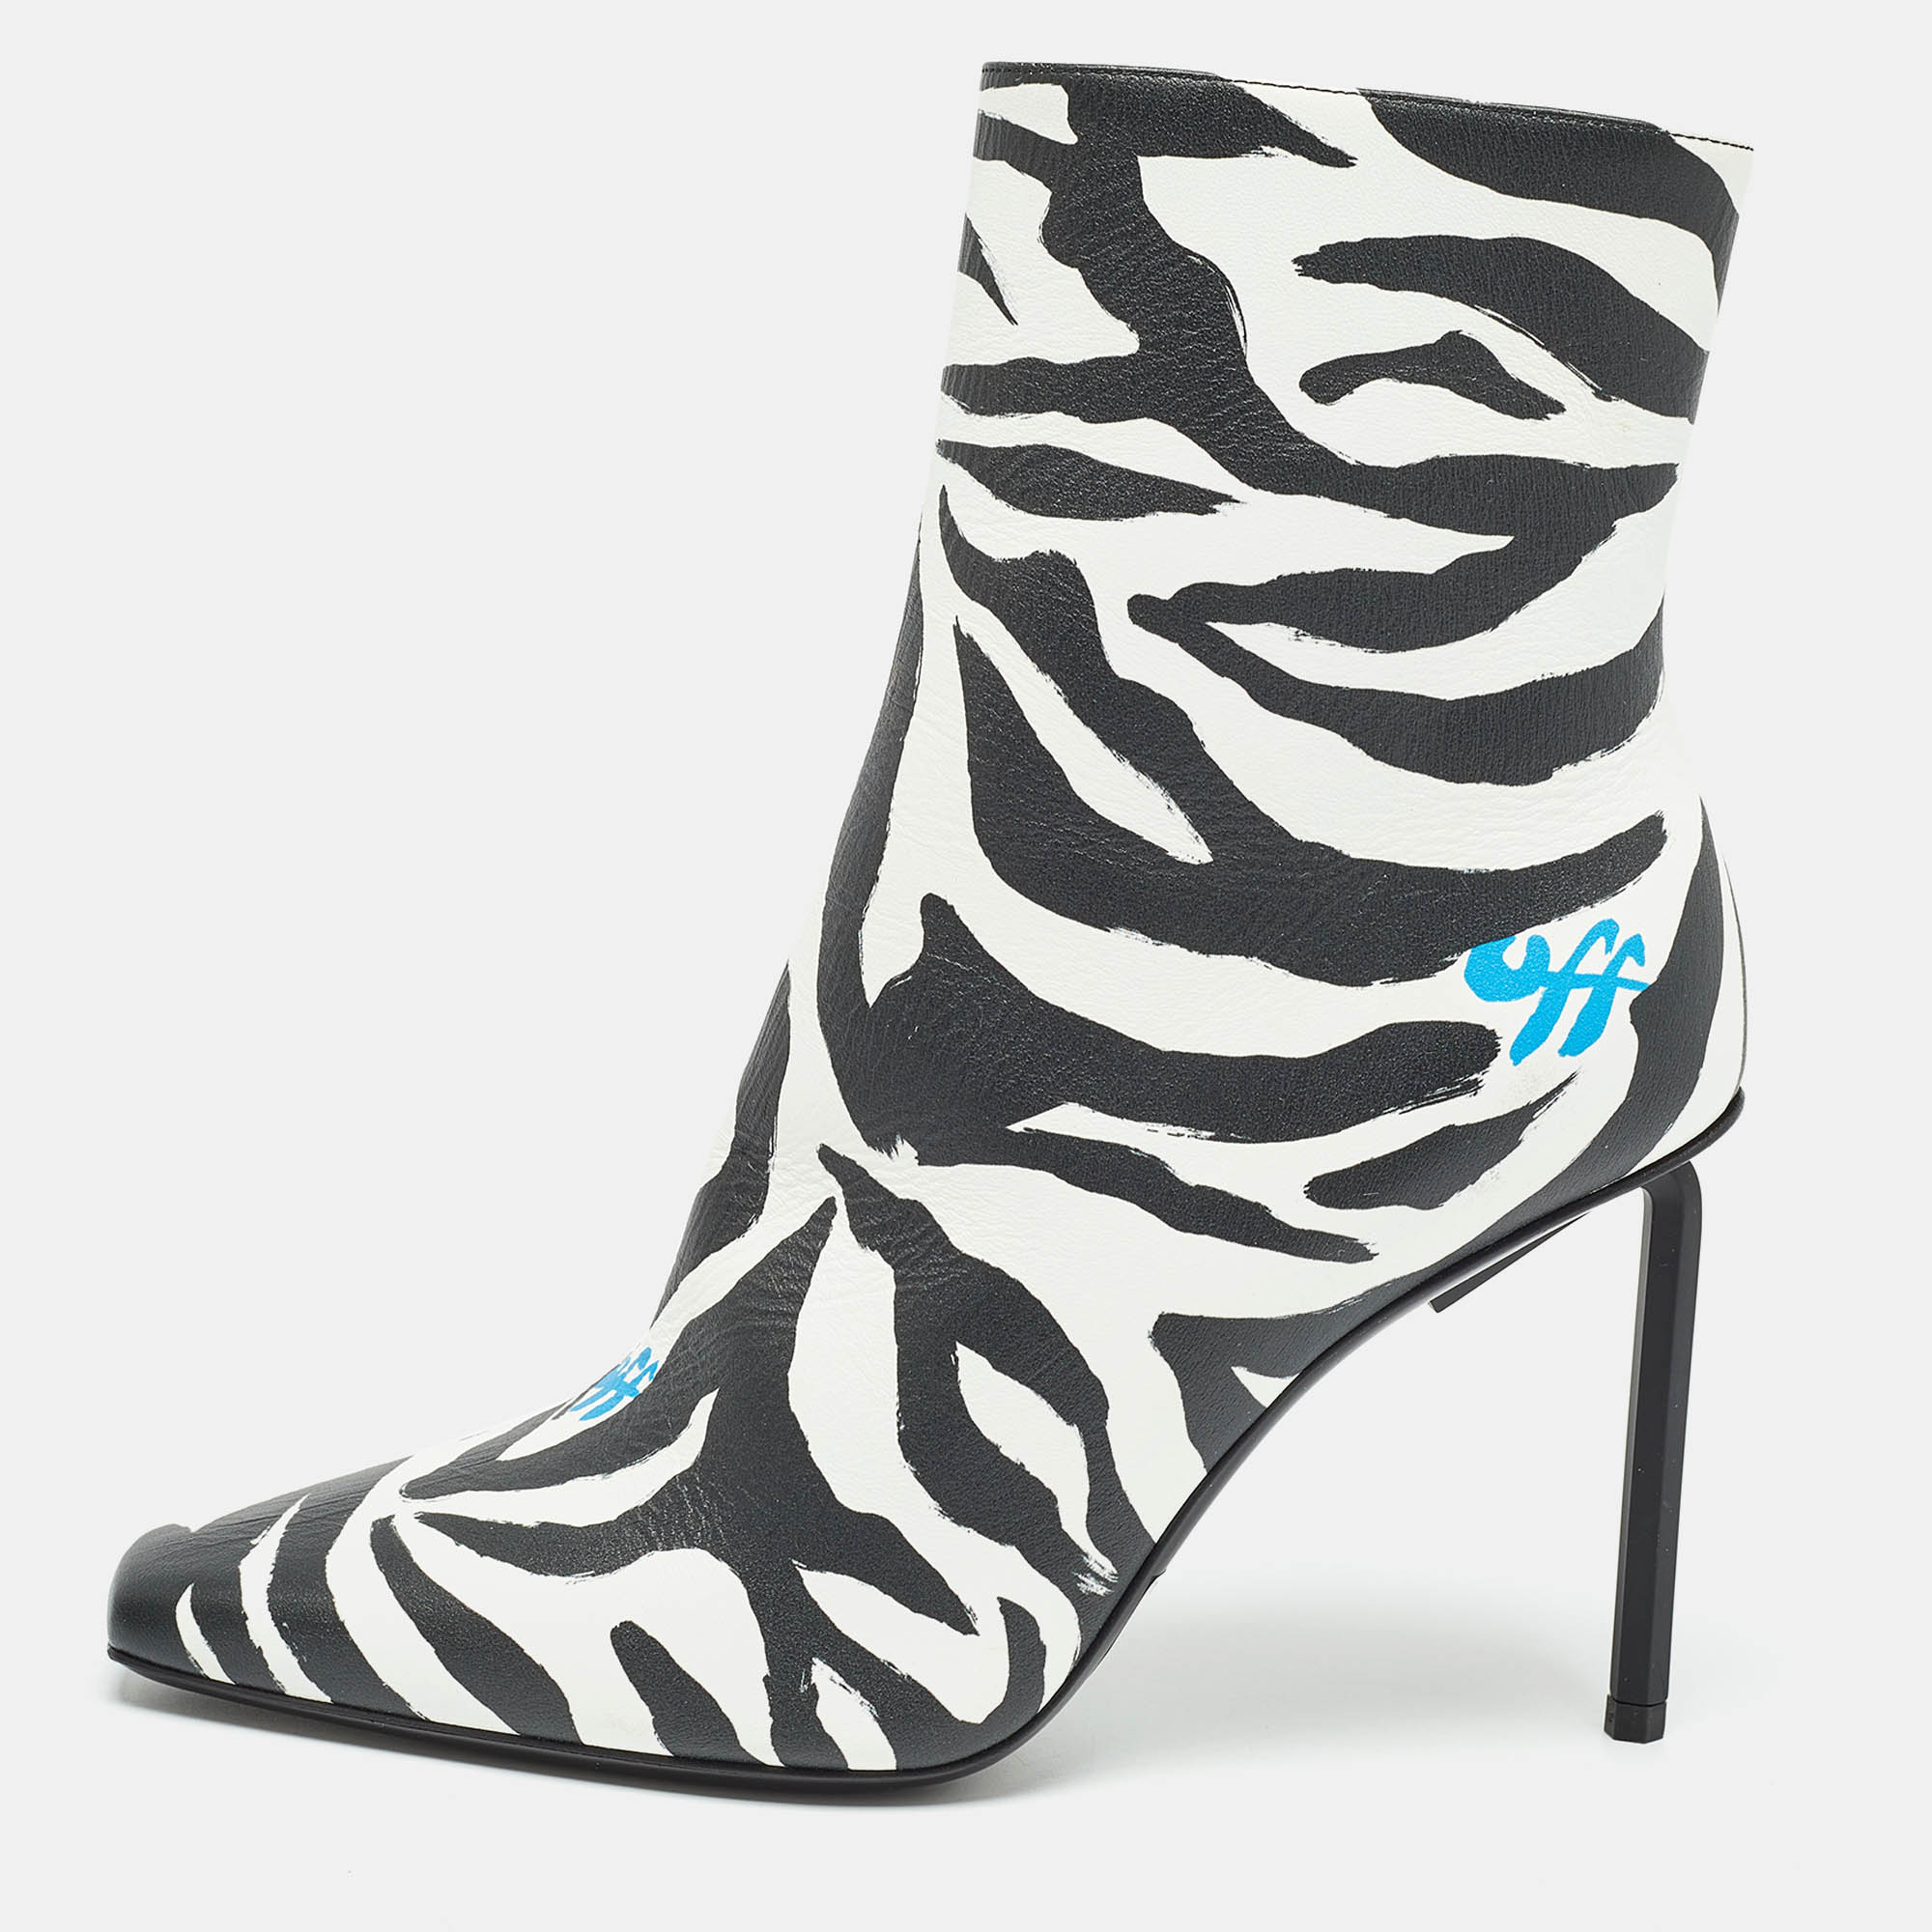 Off-white black/white zebra print leather allen boots size 38